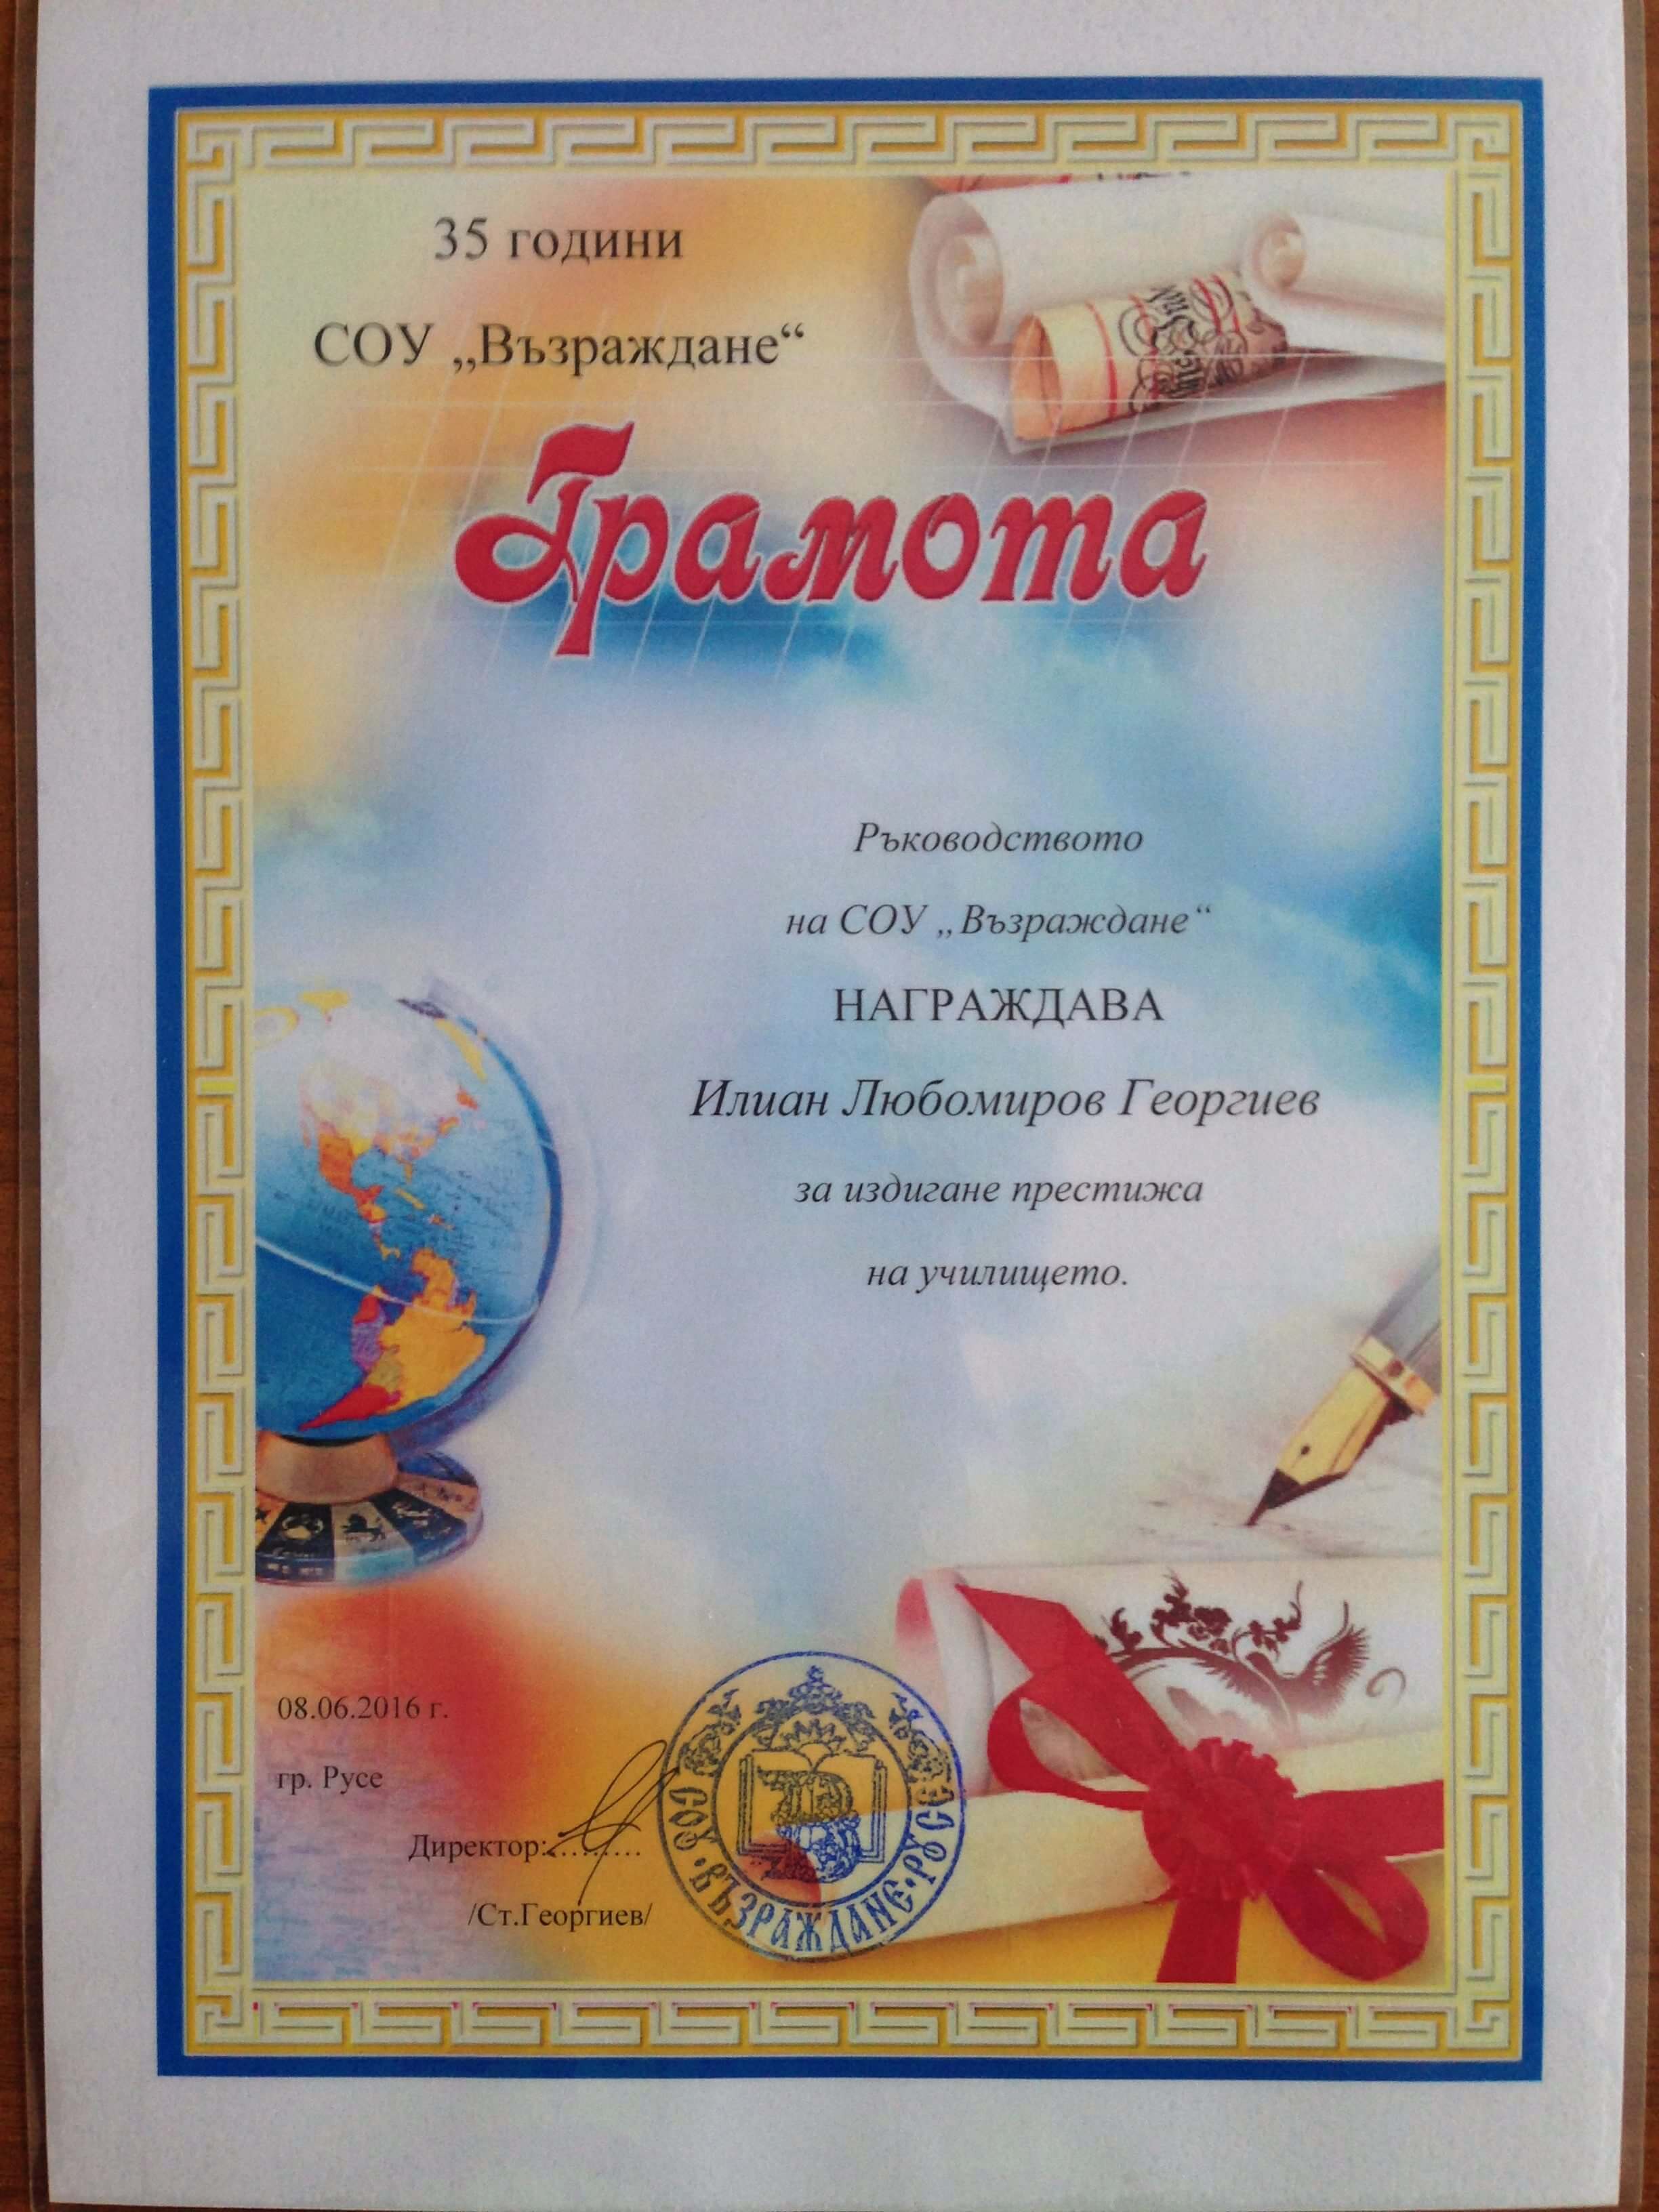 Diploma for raising the prestige of the school